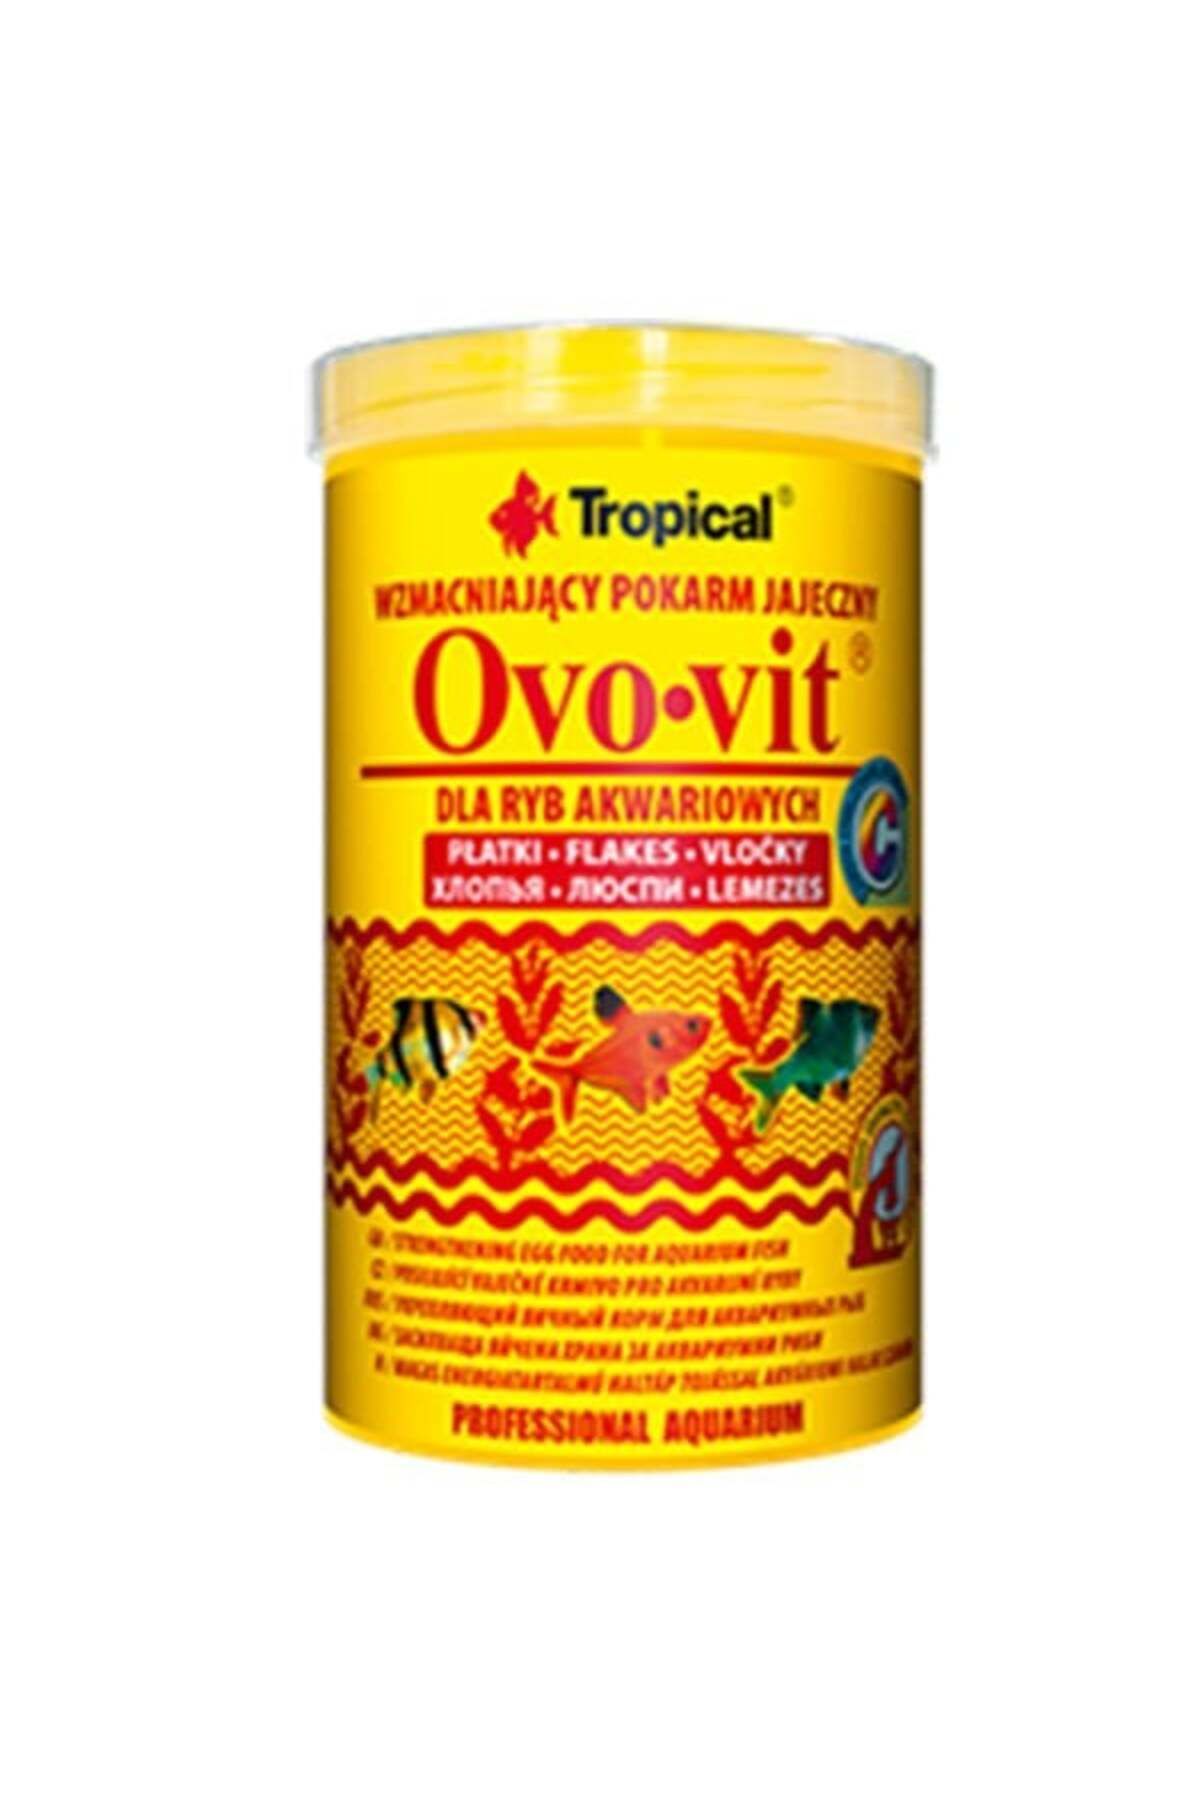 Tropical Ovovit Flakes